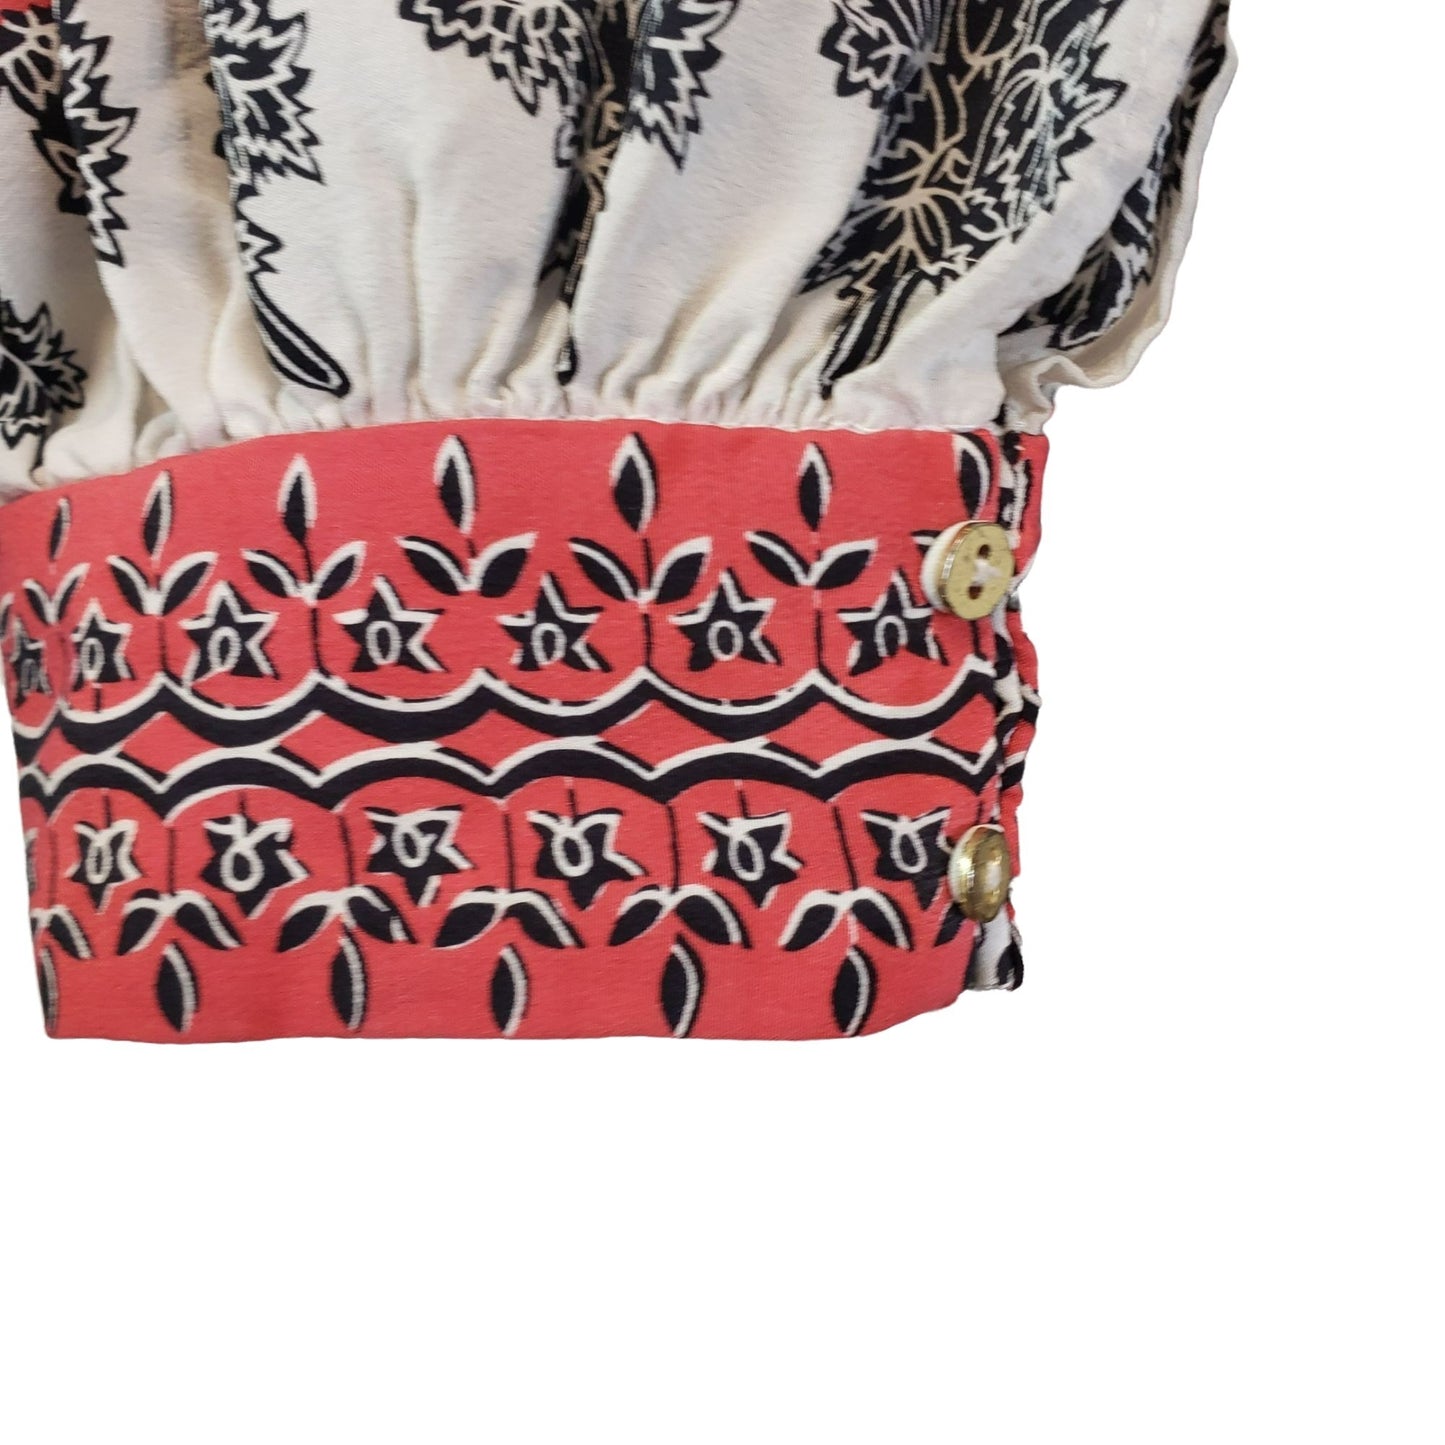 Ulla Johnson Bazaar Silk Dress in Indian Floral Size 2